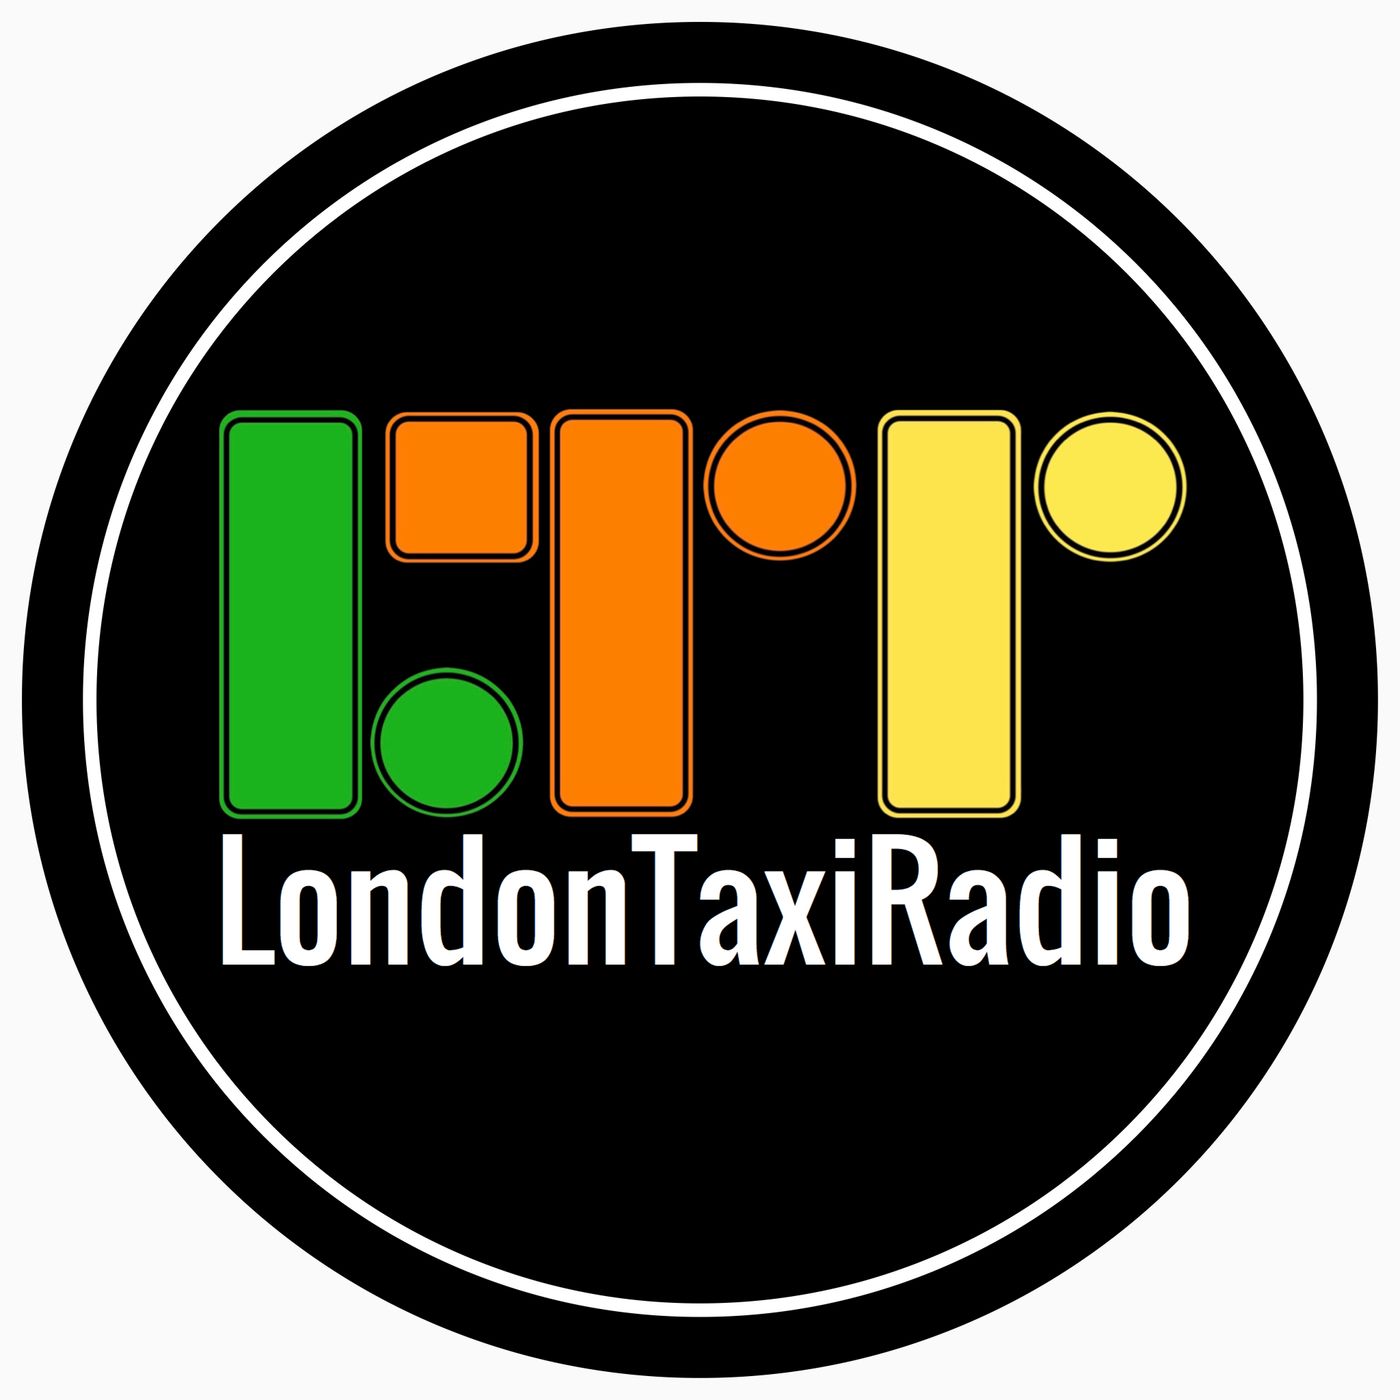 London Taxi Radio's show